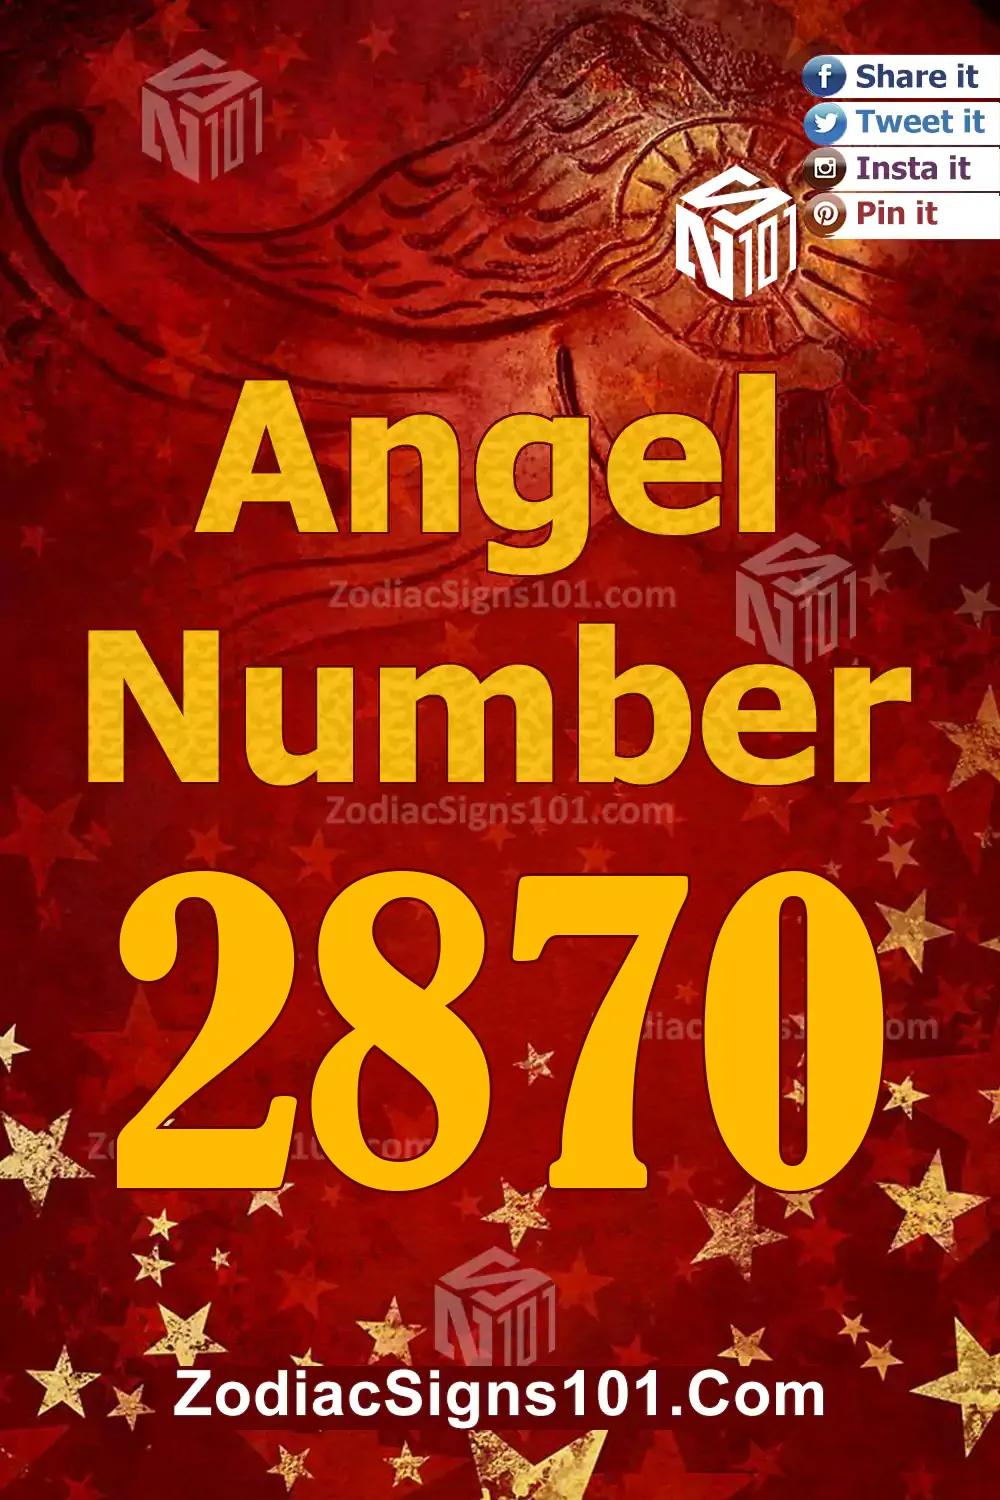 2870-Angel-Number-Meaning.jpg